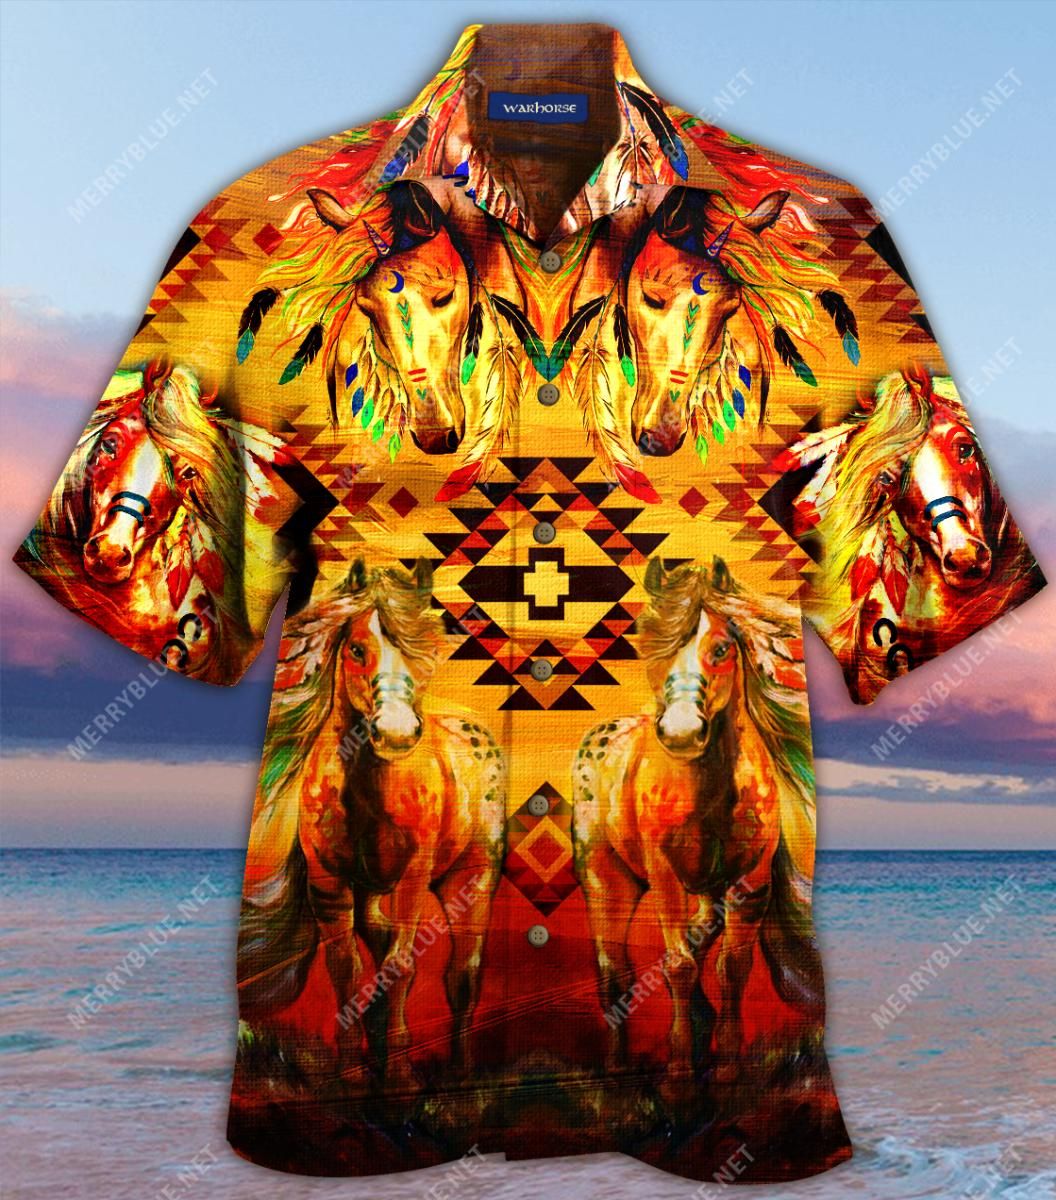 Amazing War Horse Aloha Hawaiian Shirt Colorful Short Sleeve Summer Beach Casual Shirt For Men And Women